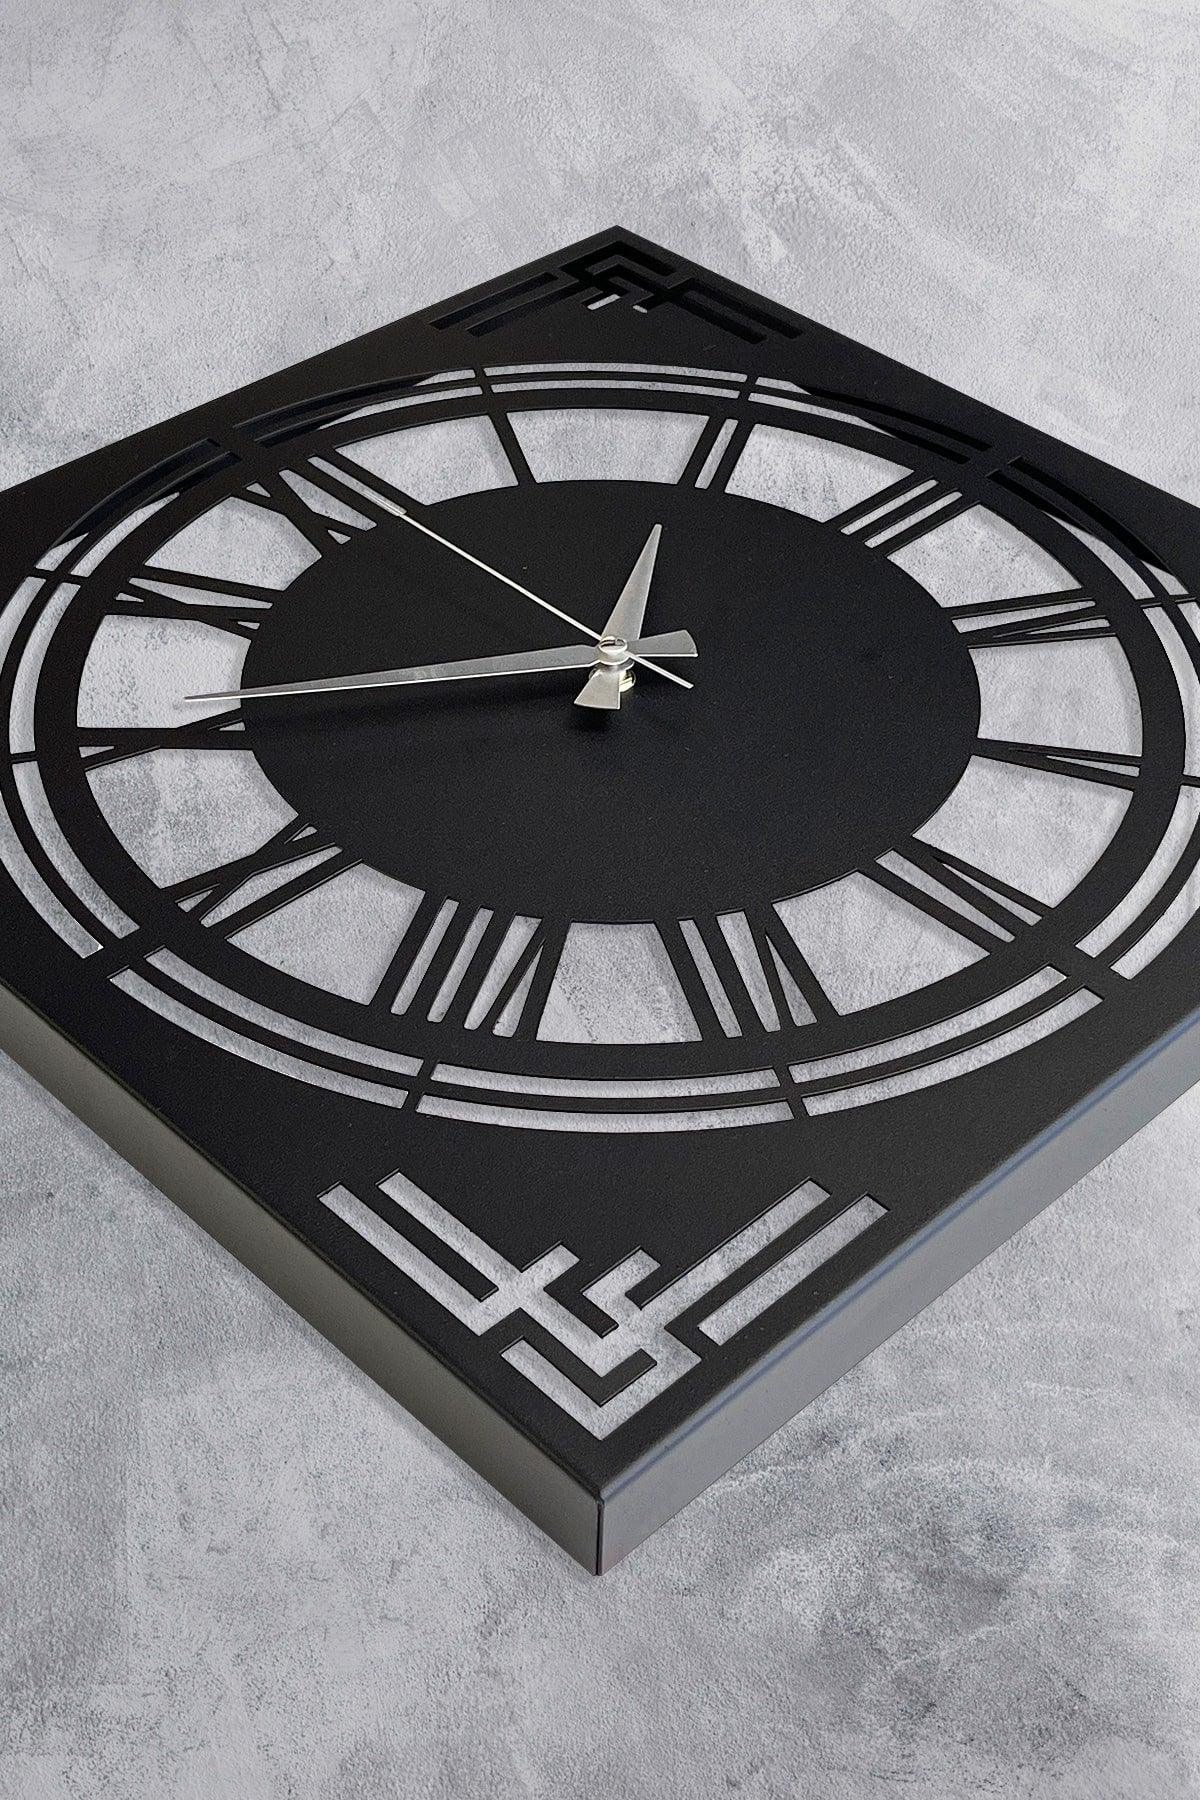 41 Cm Metal Material Flowing Seconds Silent Mechanism Decorative Wall Clock - Swordslife